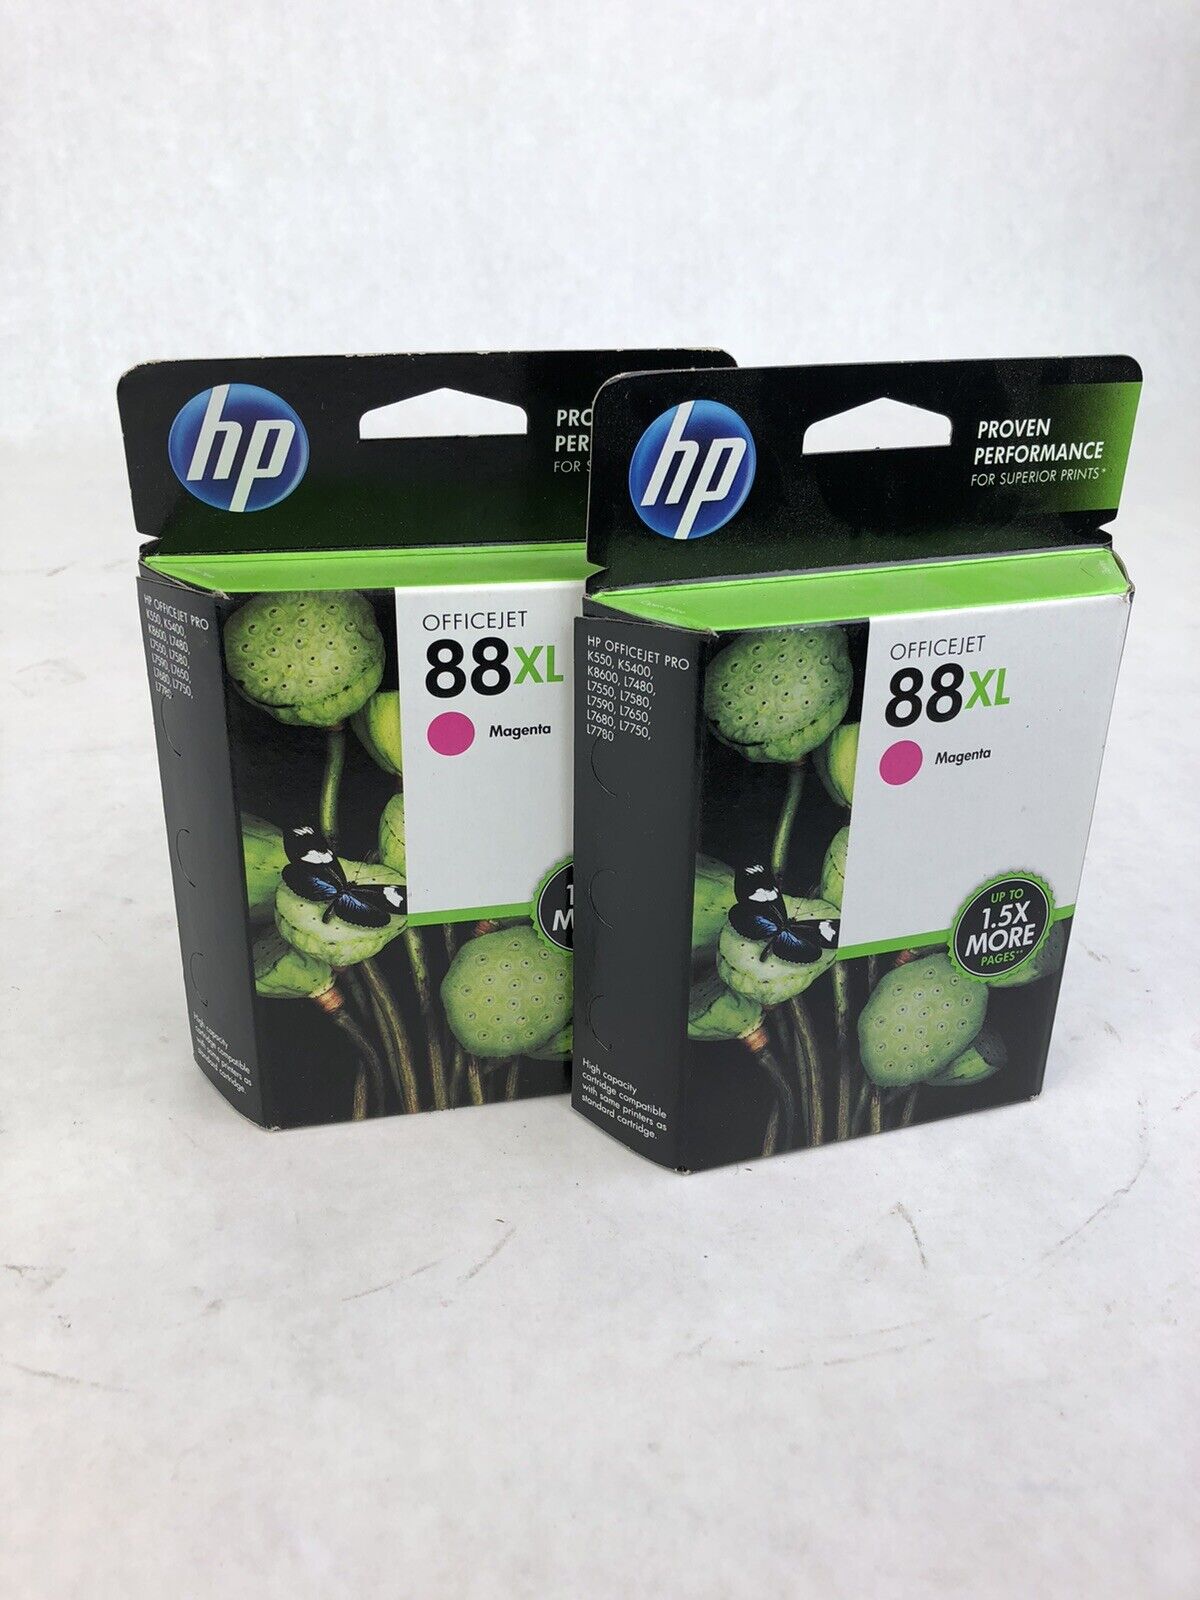 HP OfficeJet 88XL Magenta Ink Cartridge Expires July 2014 Lot of 2